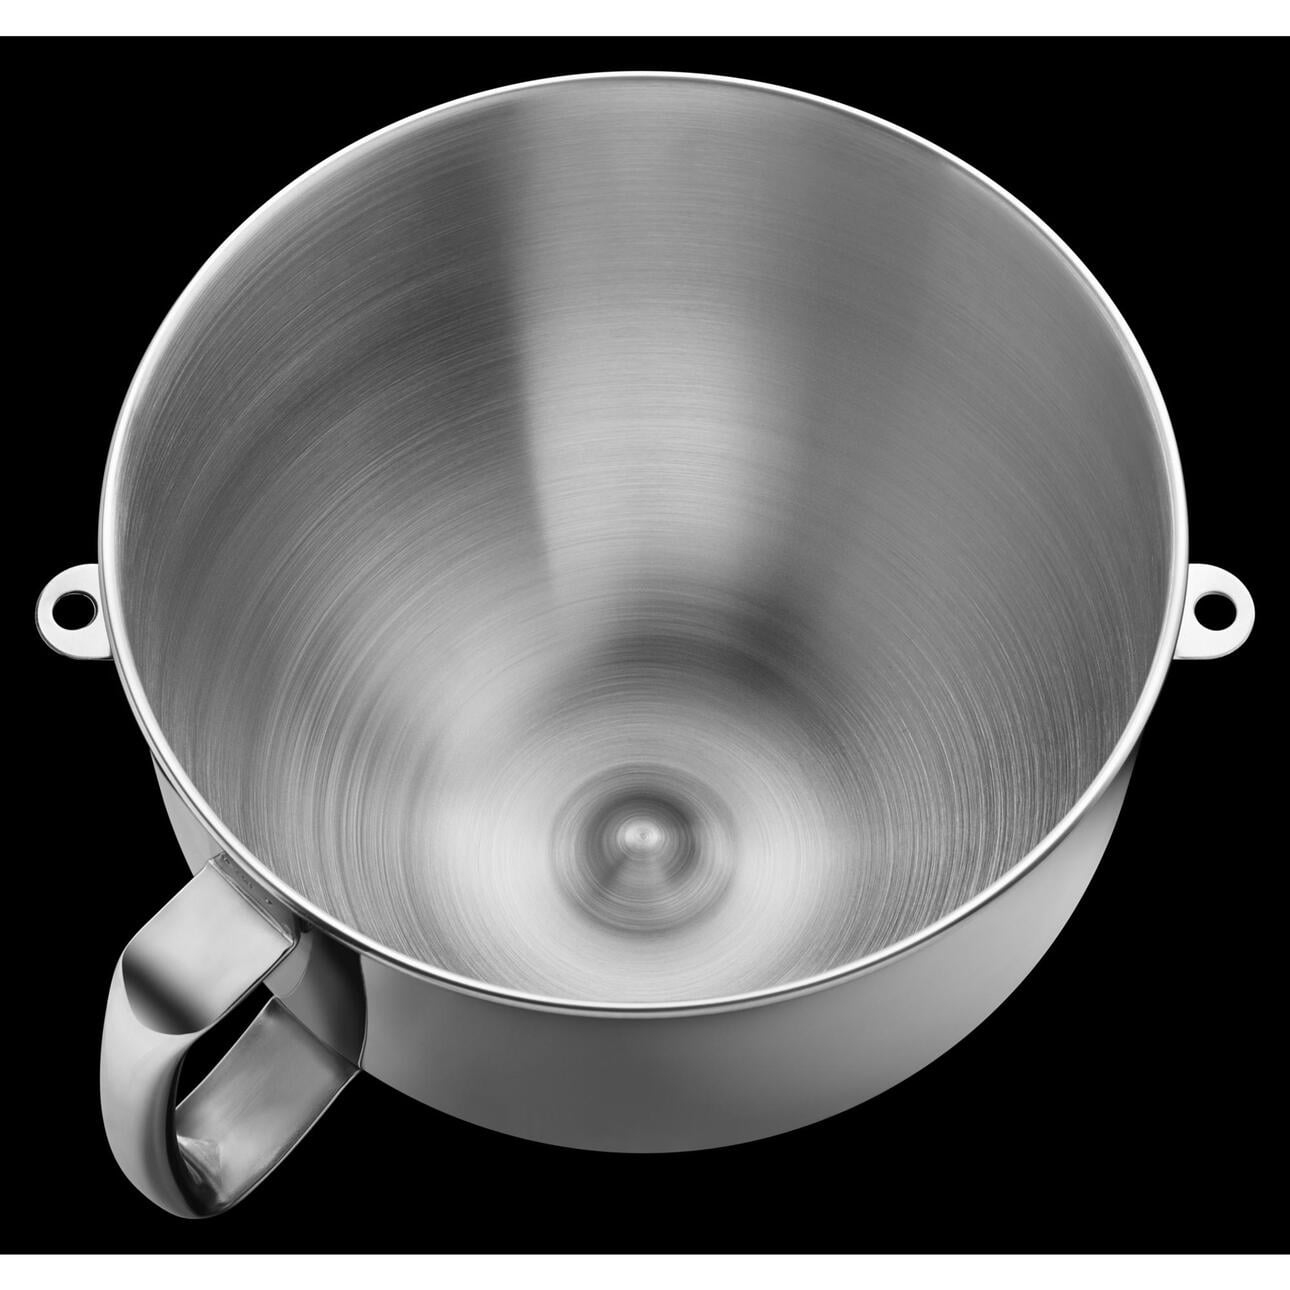 KitchenAid Stainless Steel 7-Quart Bowl-Lift Mixer Bowl KA7QBOWL